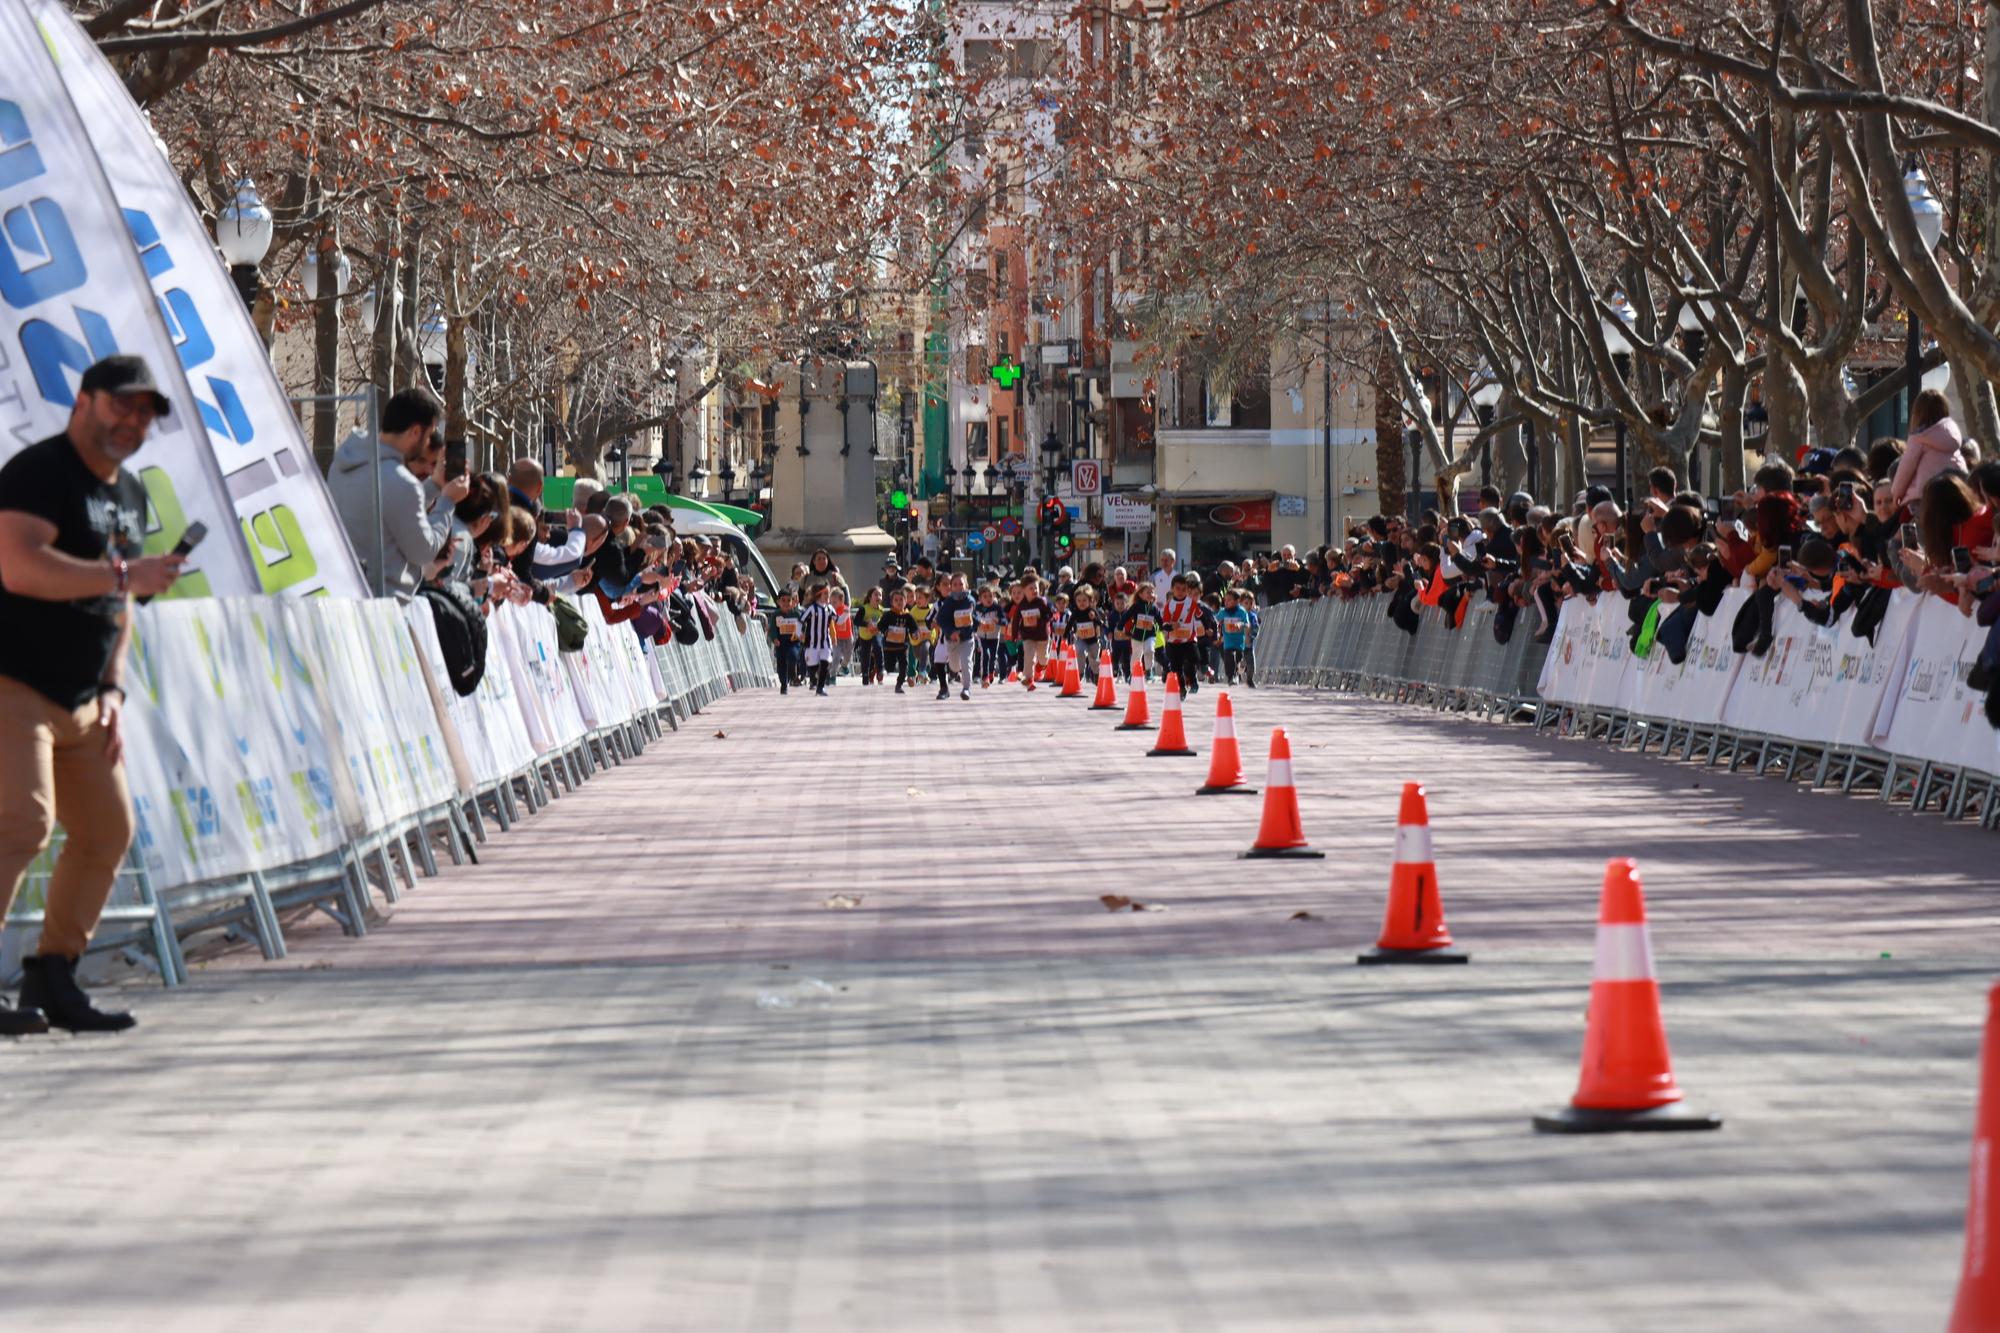 Las mejores imágenes de la maratón infantil en Castelló